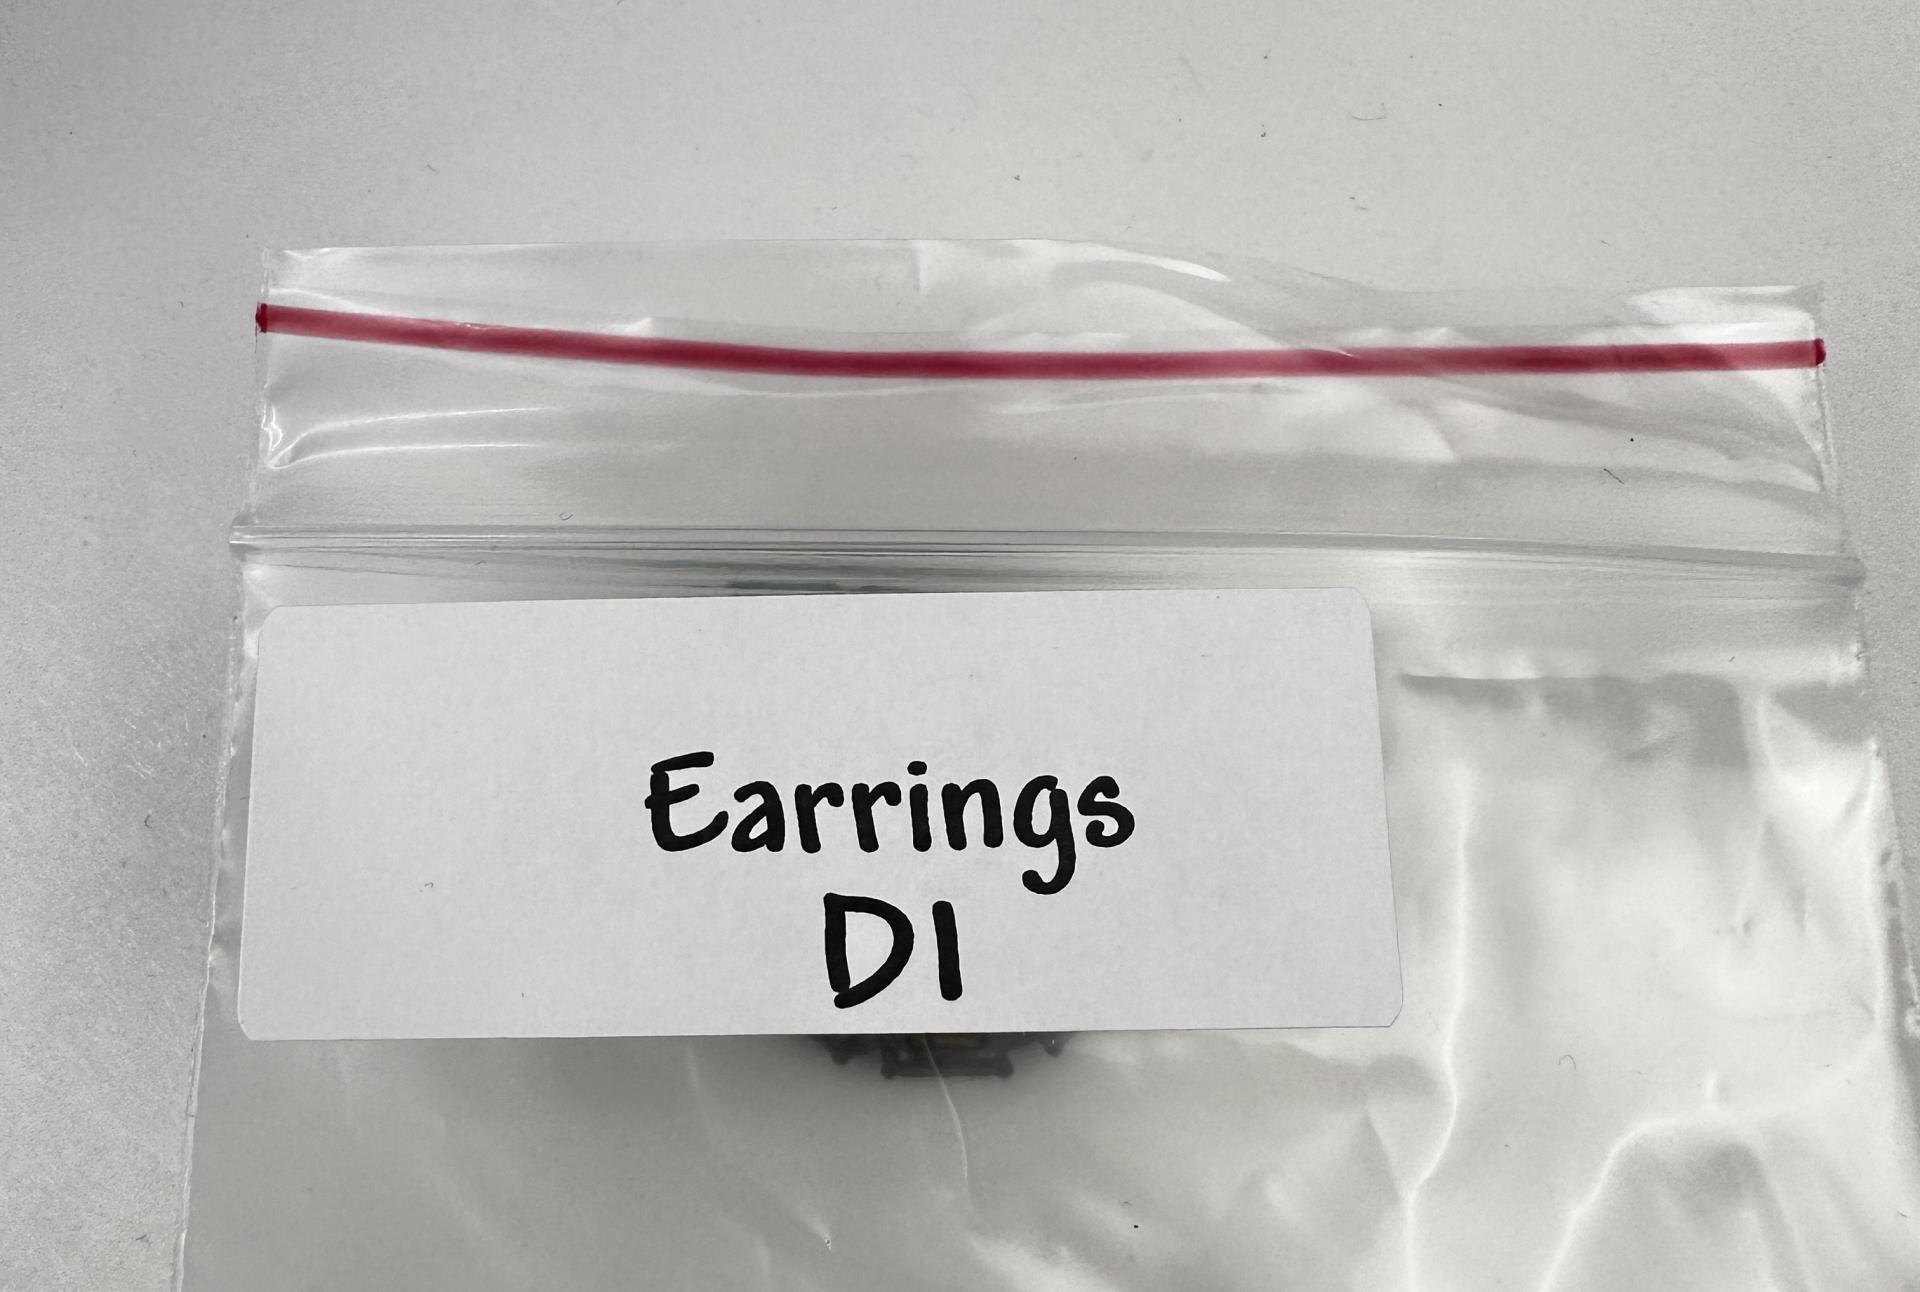 Sterling Silver Rhinestone Earrings